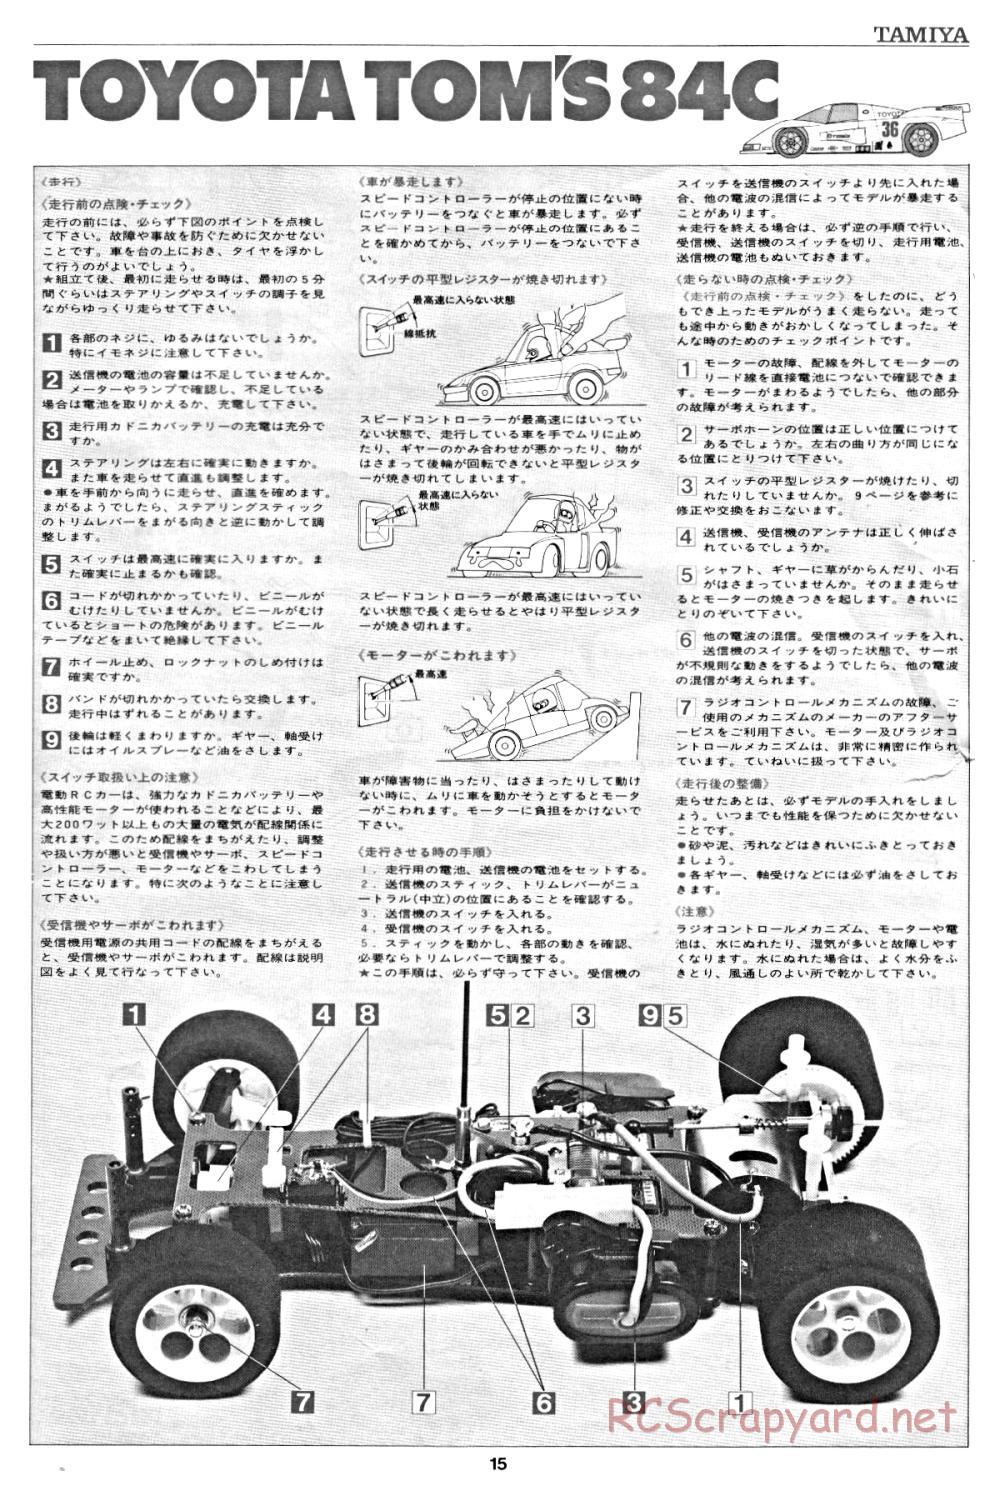 Tamiya - Toyota Tom's 84C - RM MK.6 - 58049 - Manual - Page 15